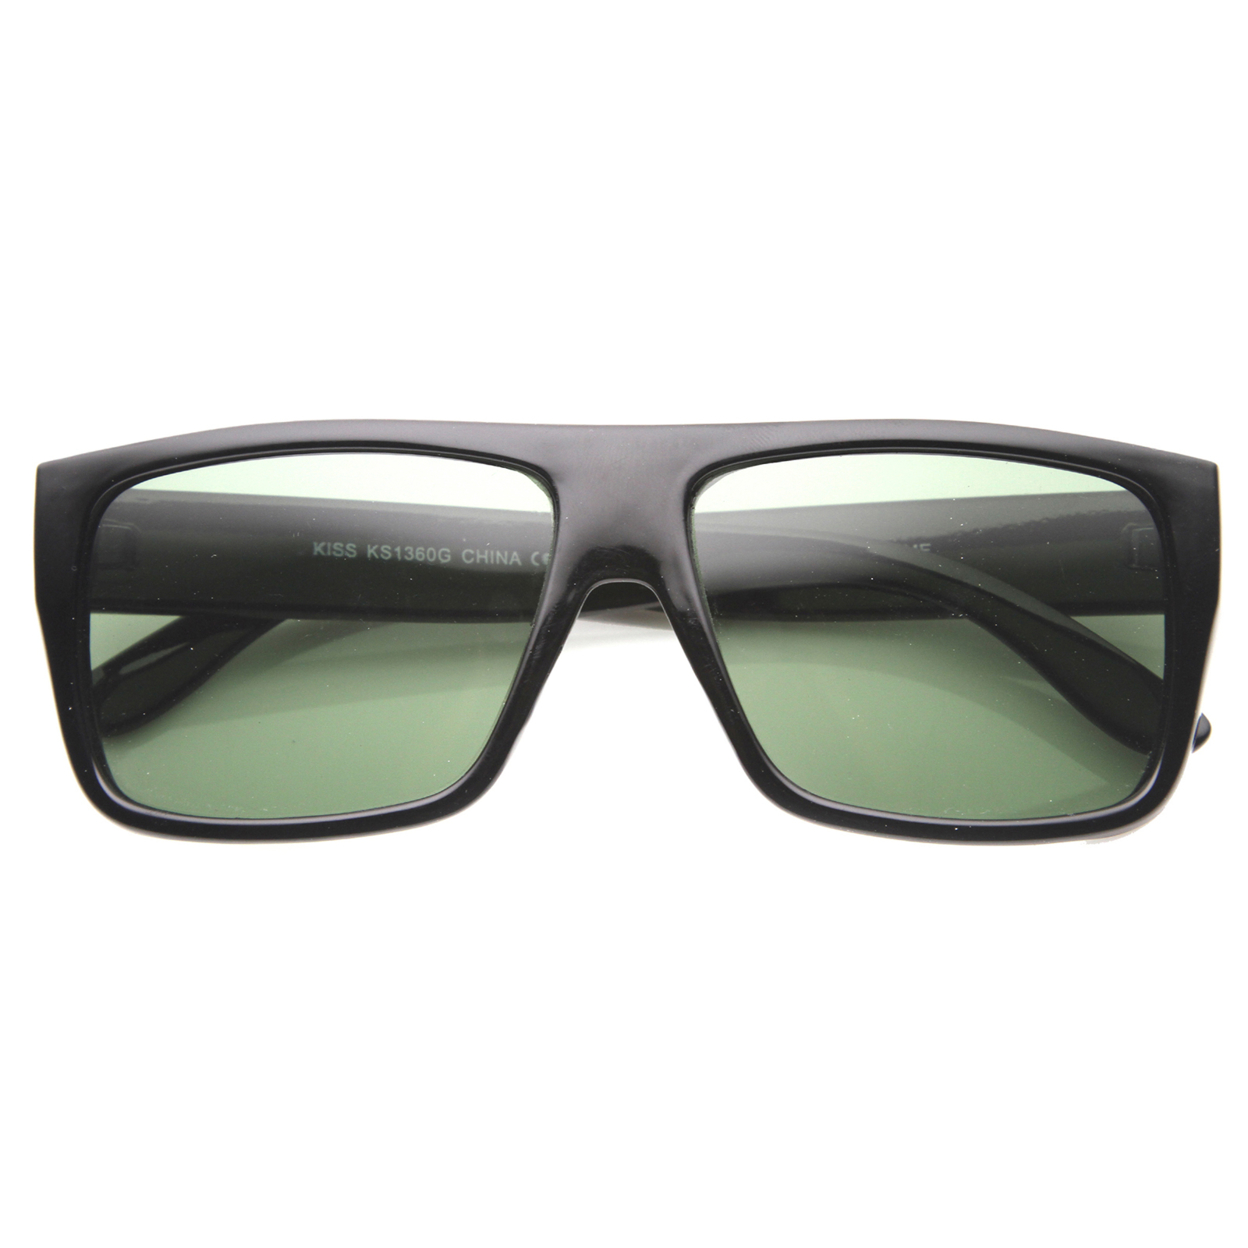 Unisex Rectangular Sunglasses With UV400 Protected Composite Lens 9928 - Black / Green